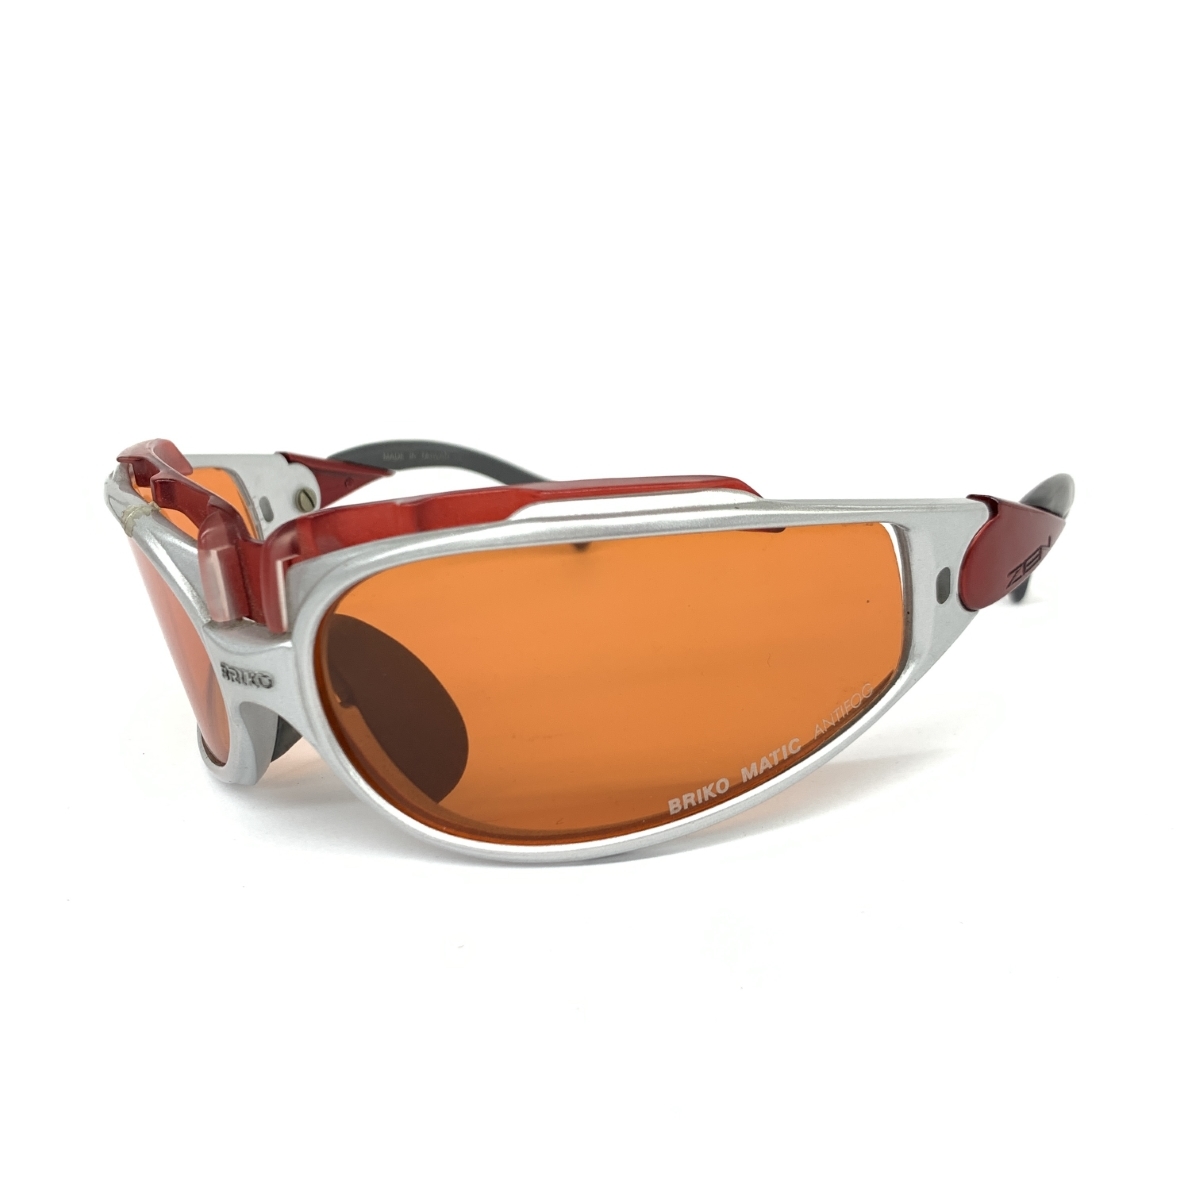 ◆BRIKO ブリコ サングラス◆ グレー/オレンジ メンズ メガネ 眼鏡 サングラス sunglasses 服飾小物